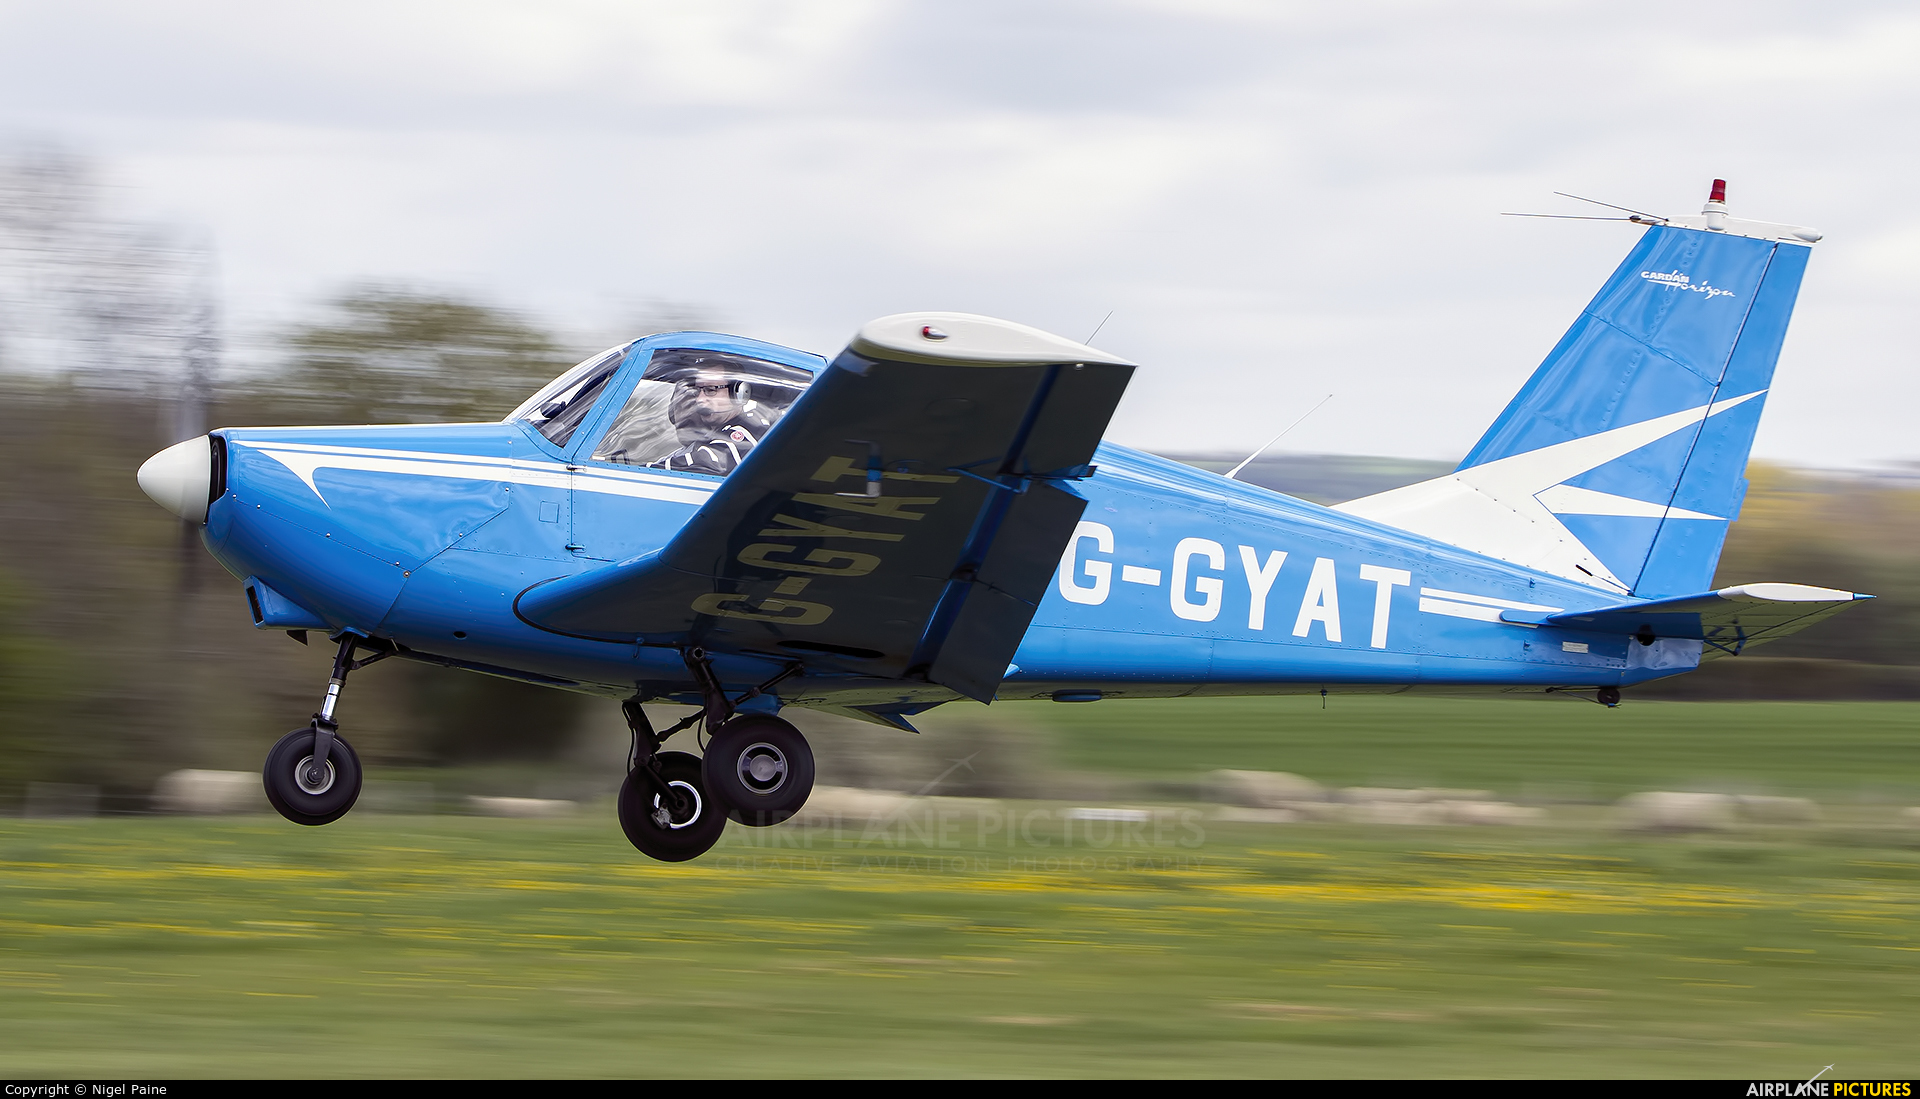 Rochester GYAT Flying Group Club G-GYAT aircraft at Lashenden / Headcorn